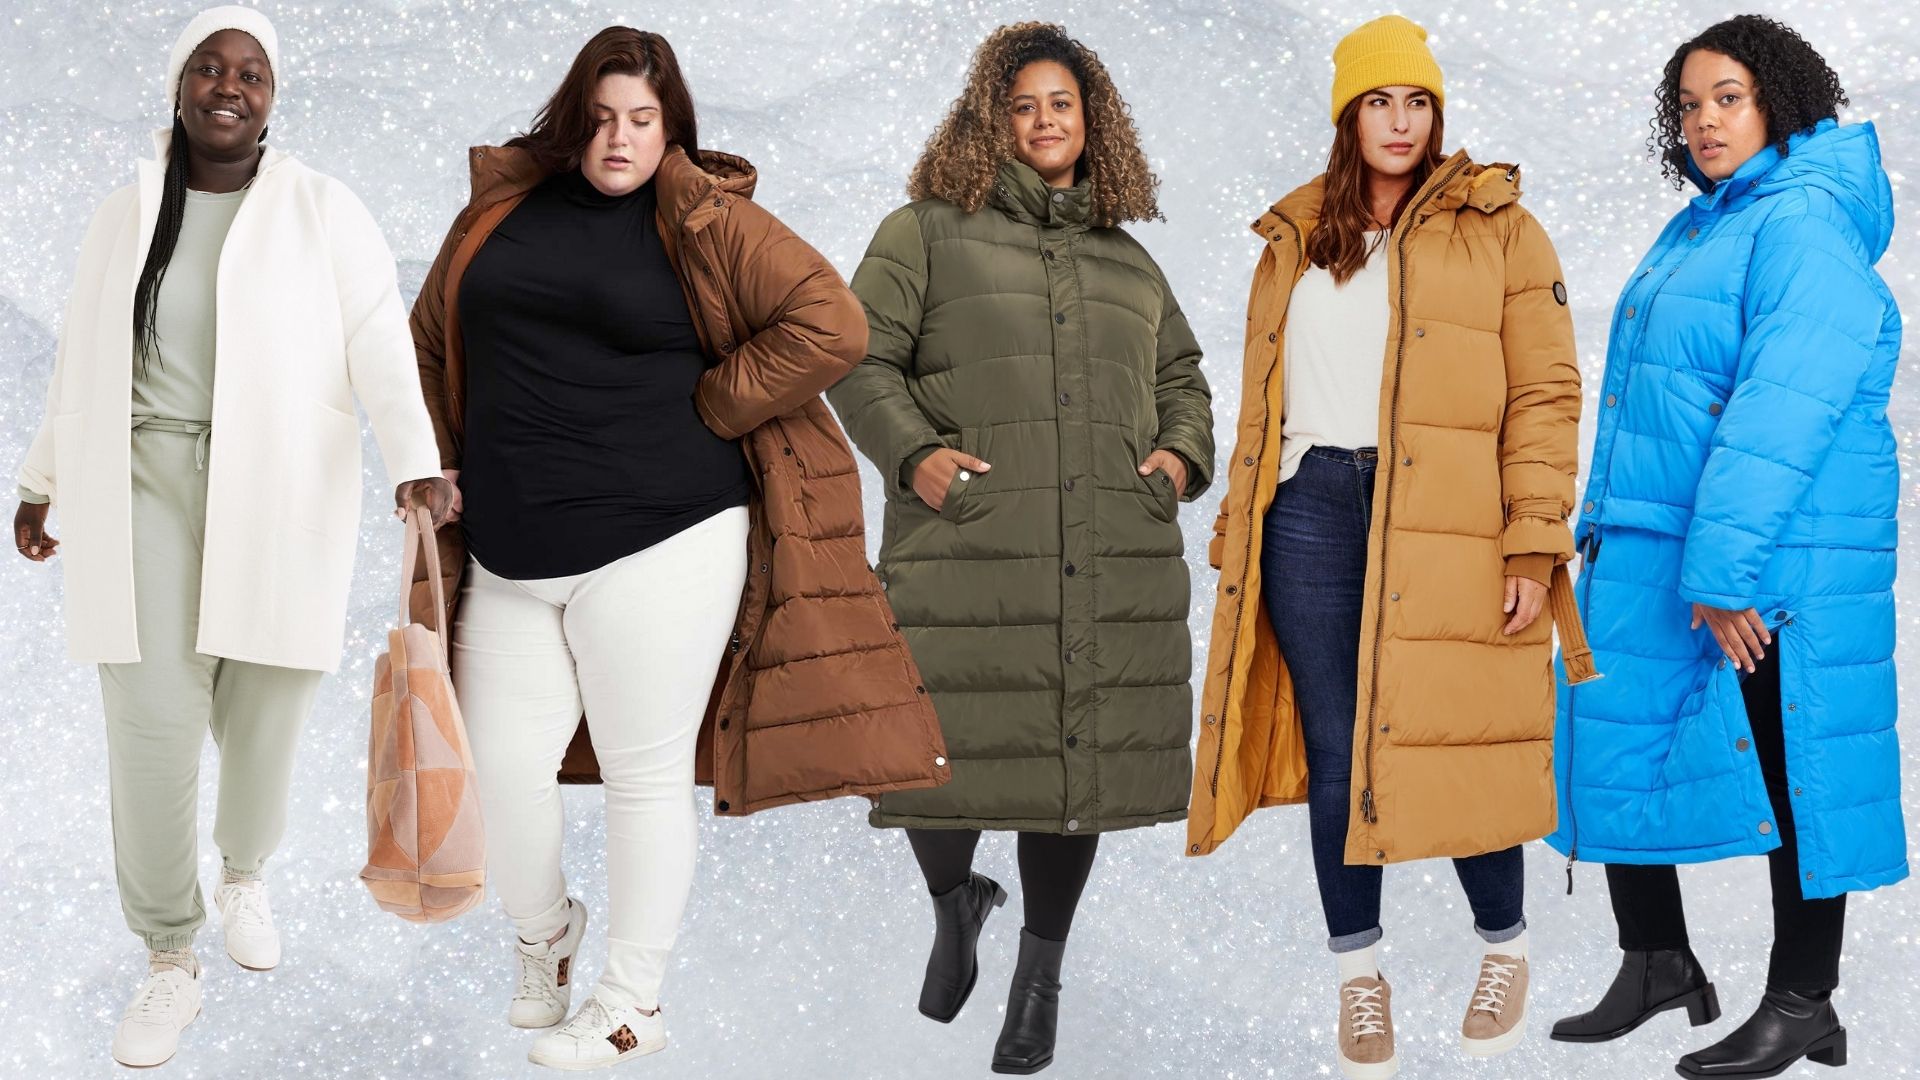 SOOTOP Women Winter Warm Coat Solid Plush Thickening Jacket Outdoor Plus Size Hooded Raincoat Windproof Outwear Black 